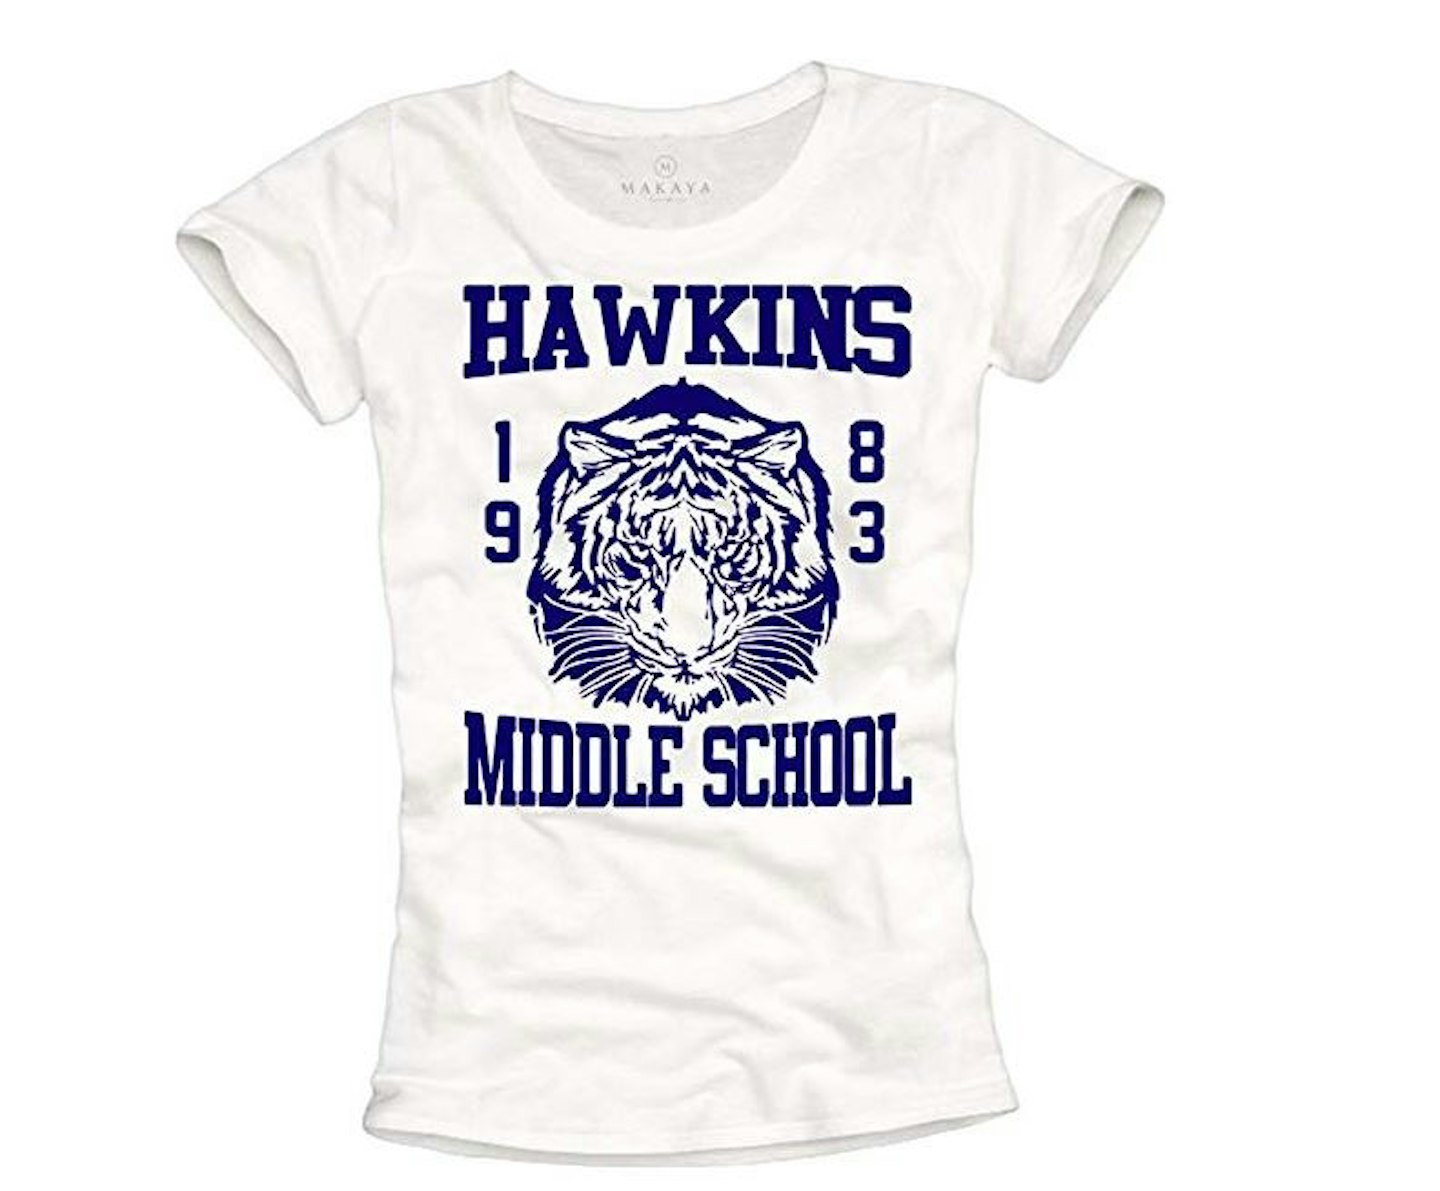 Hawkins Middle School T-shirt